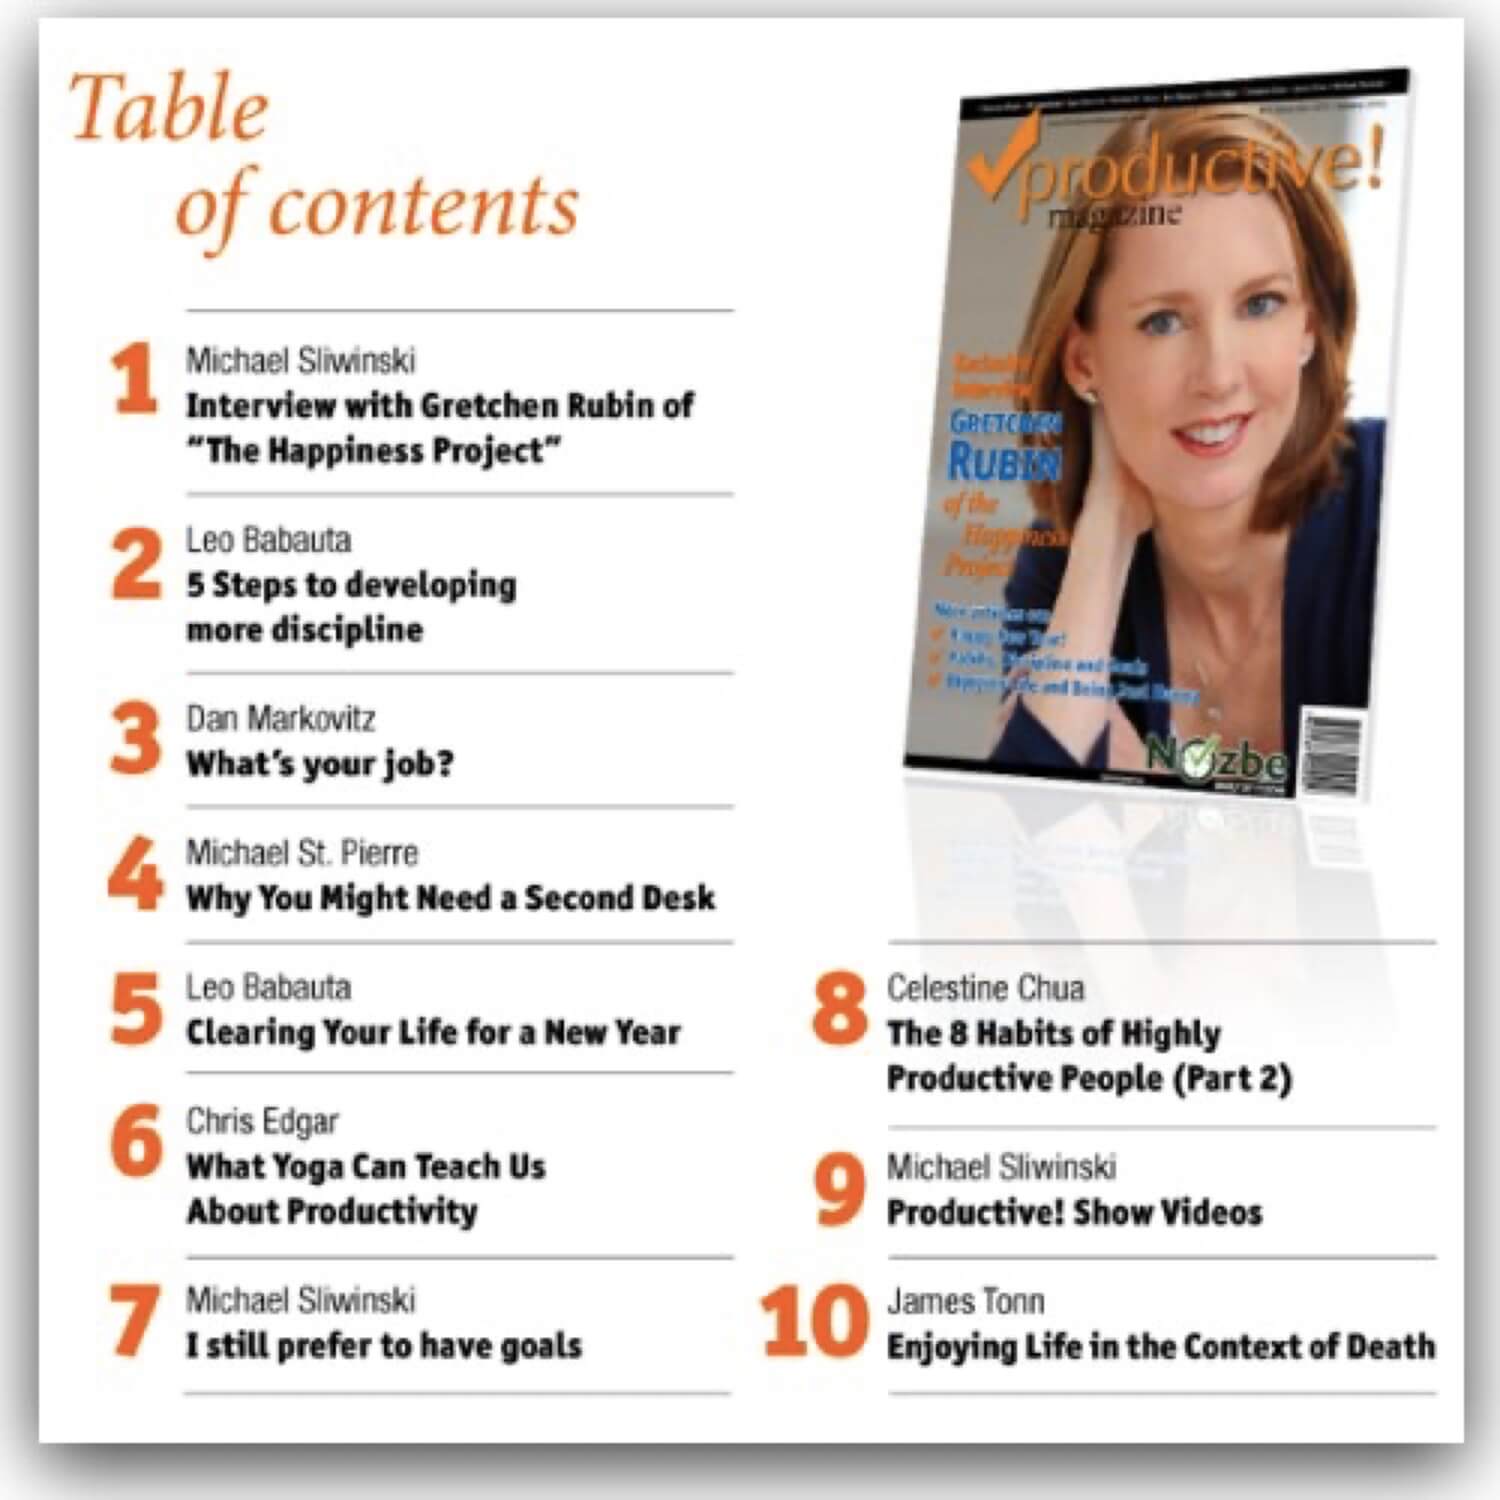 Productive! Magazine #11 with Gretchen Rubin 2